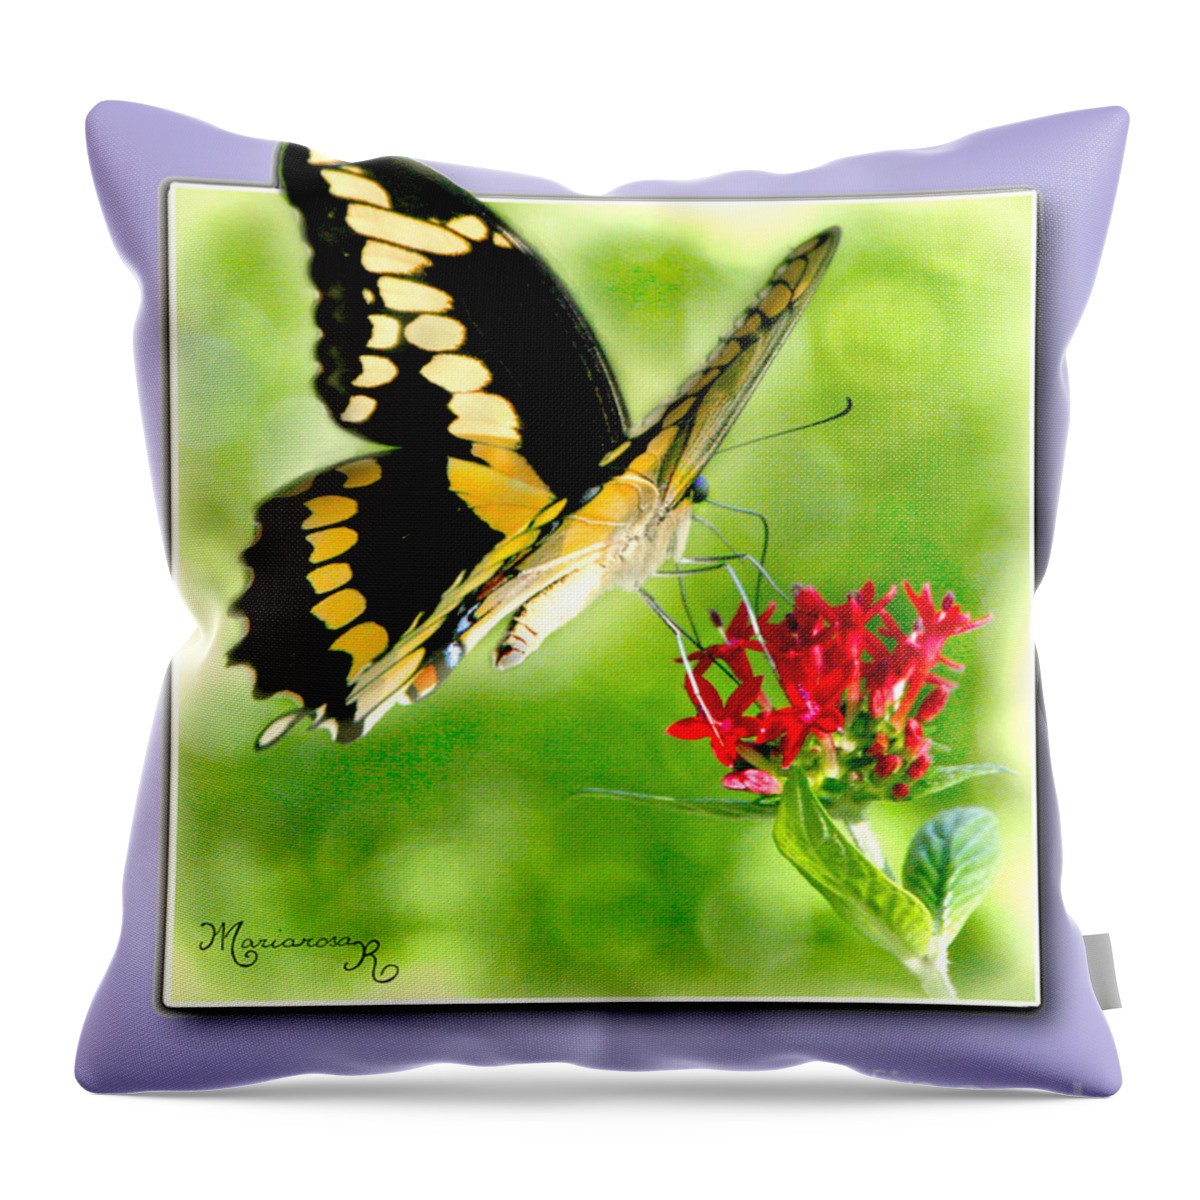 Fauna Throw Pillow featuring the photograph Soft Landing by Mariarosa Rockefeller